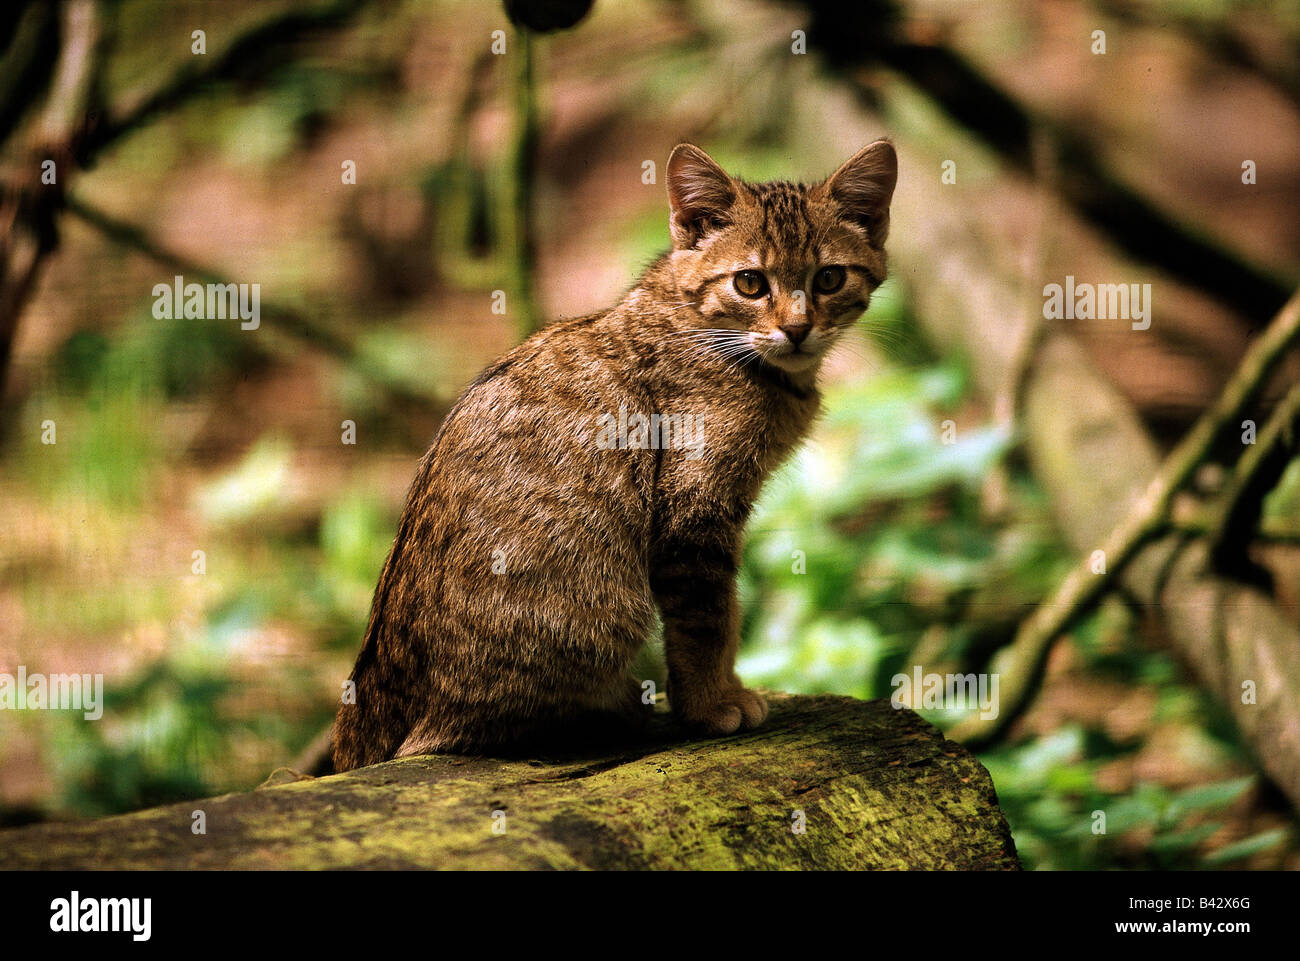 zoology / animals, mammal / mammalian, cats, (Felidae), wild cat, (Felis silvestris), young wild cat, sitting on stump, forest, Stock Photo